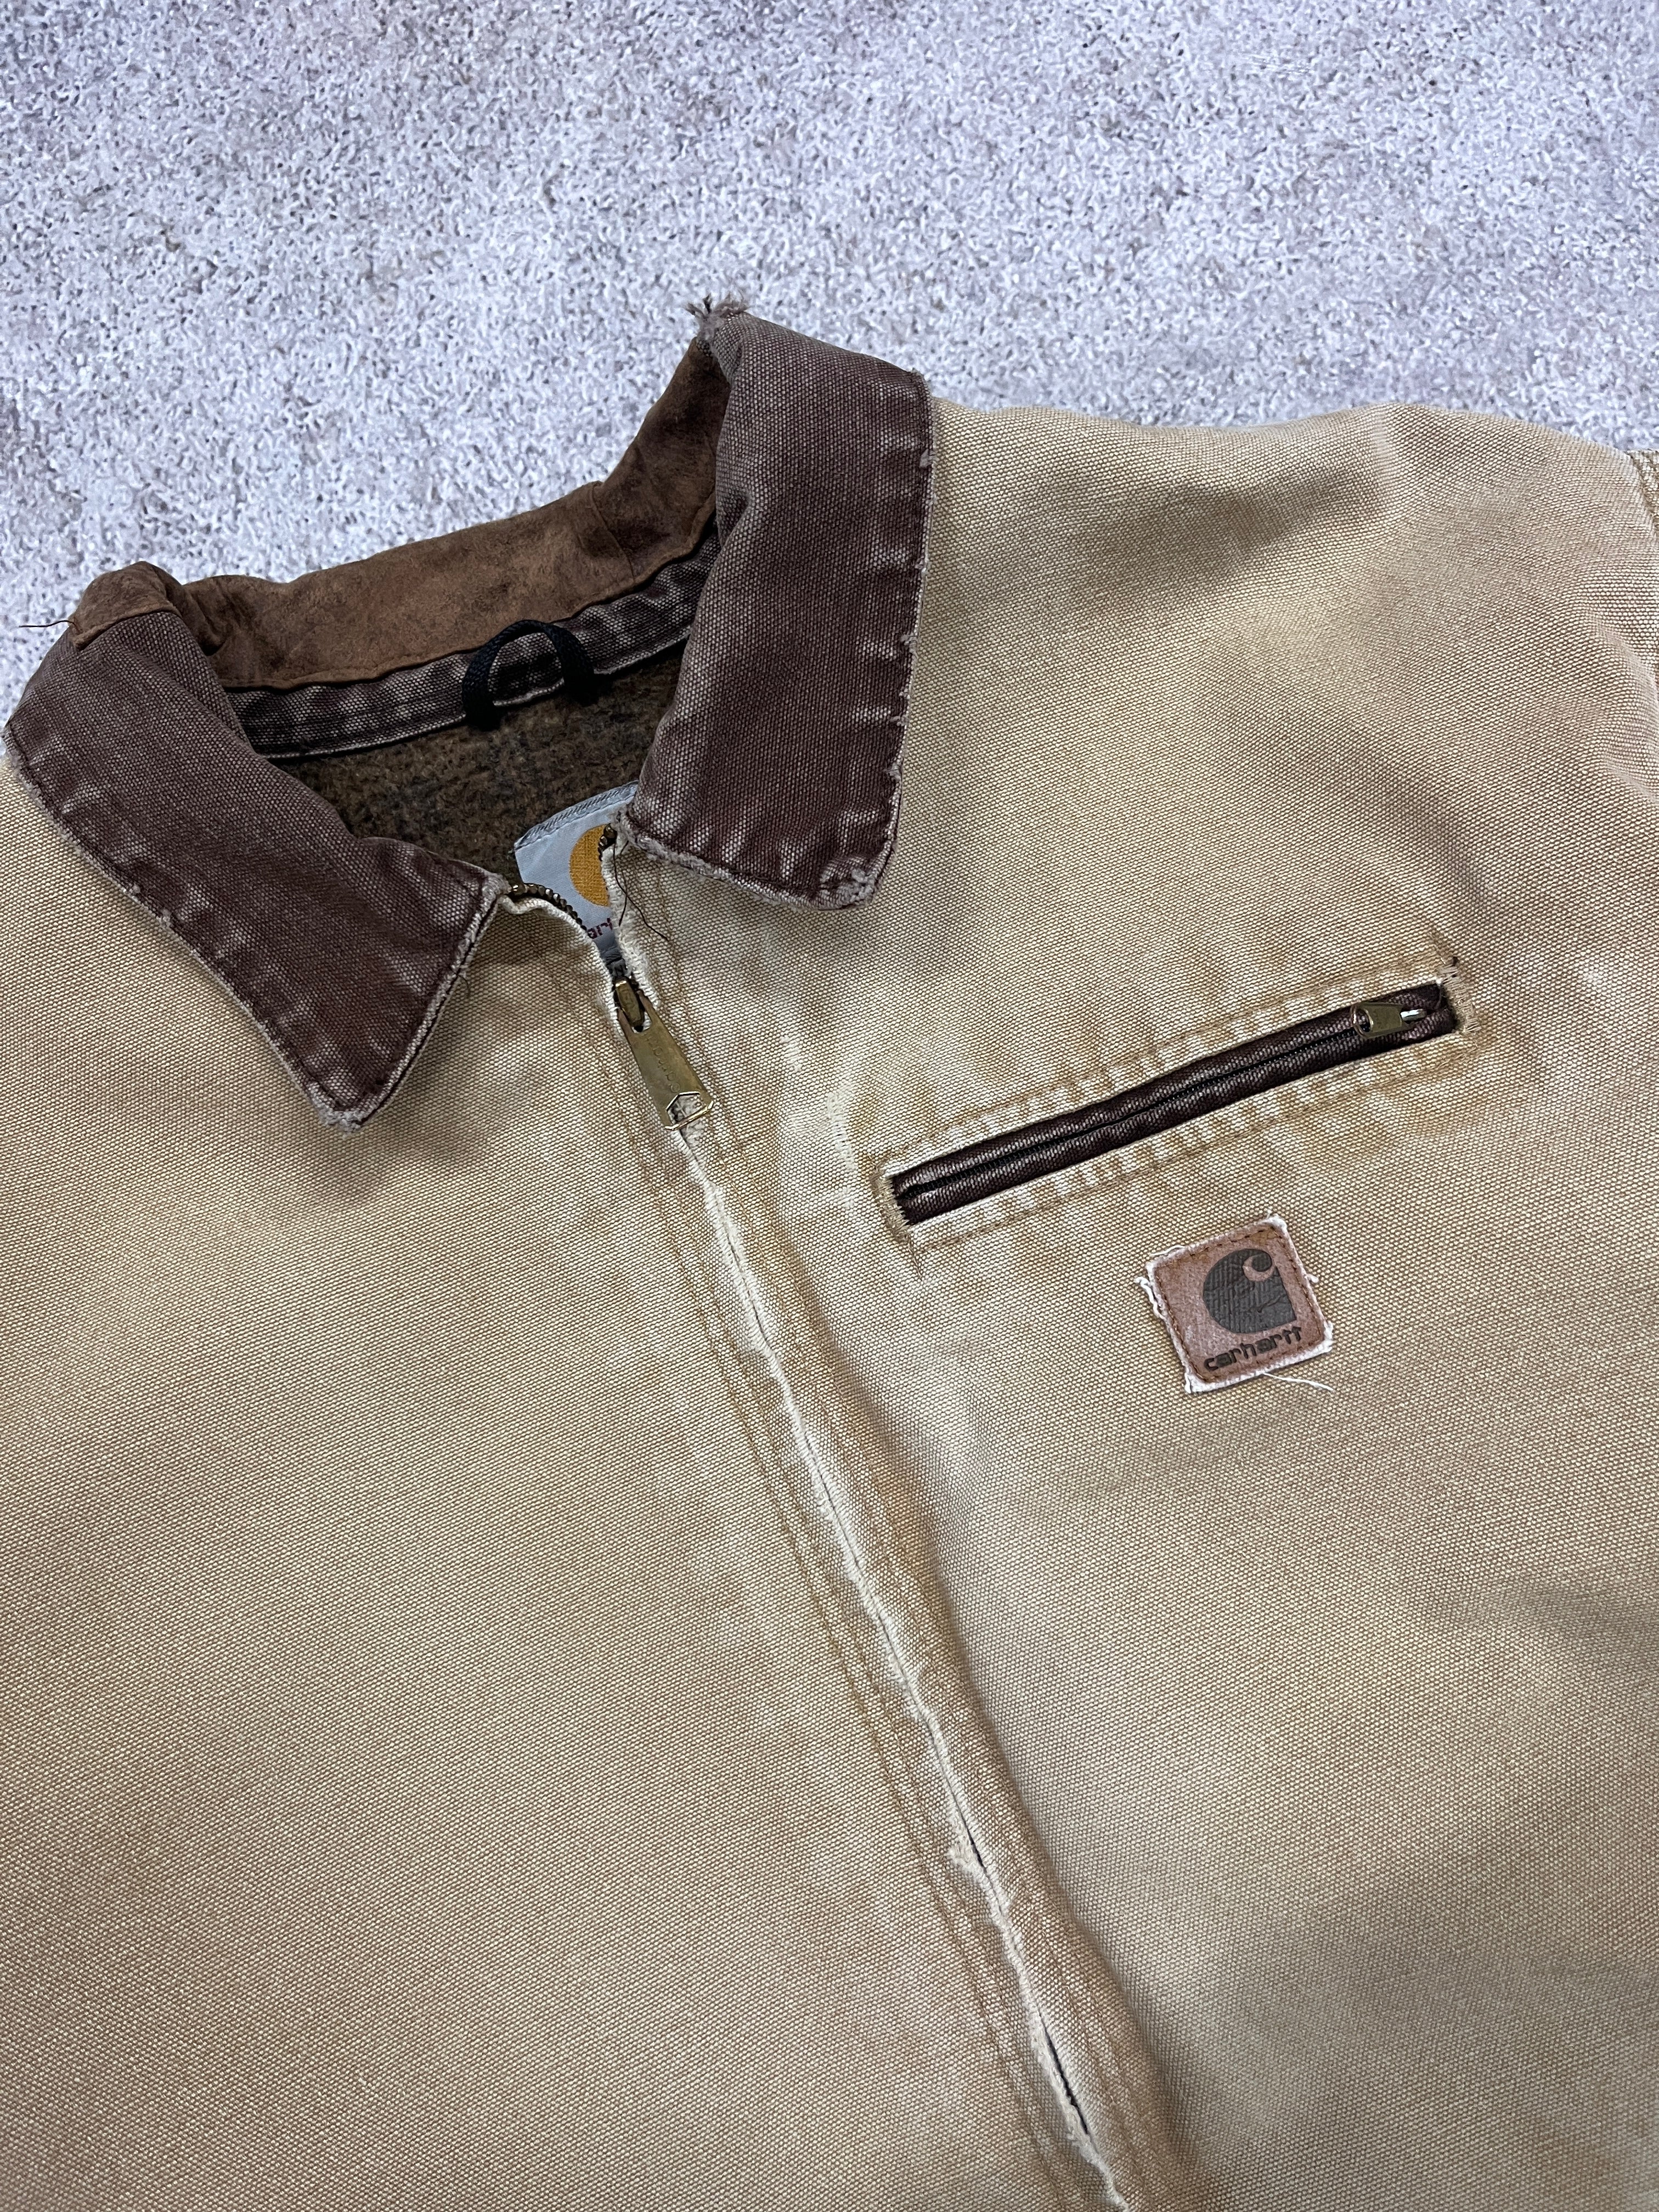 Vintage Workwear Jacket Beige // X-Large (Boxy) - RHAGHOUSE VINTAGE